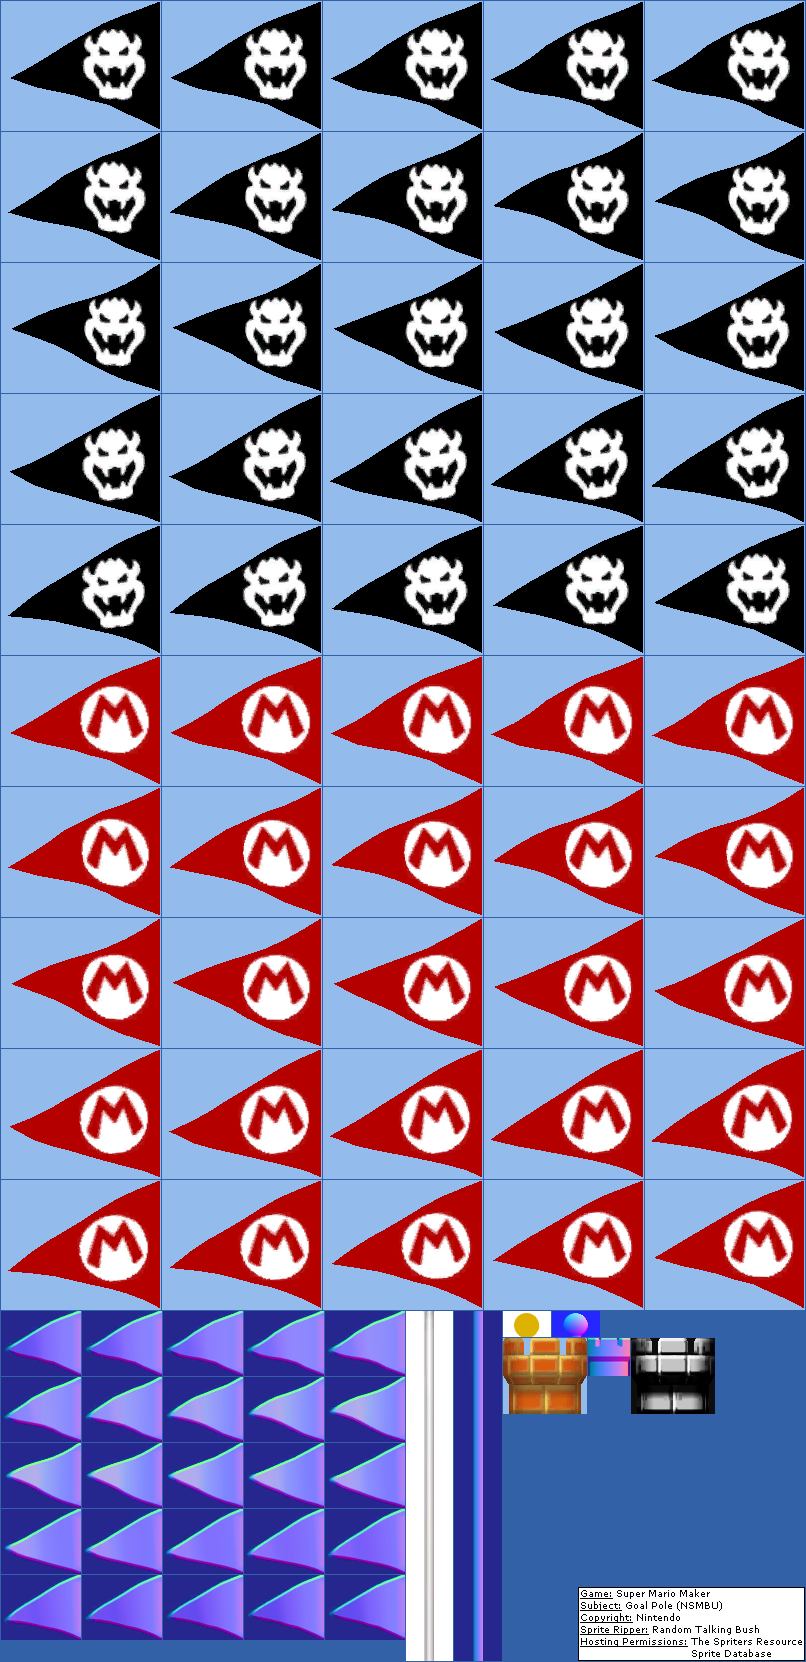 The Spriters Resource Full Sheet View Super Mario Maker Goal Pole Nsmbu 1149